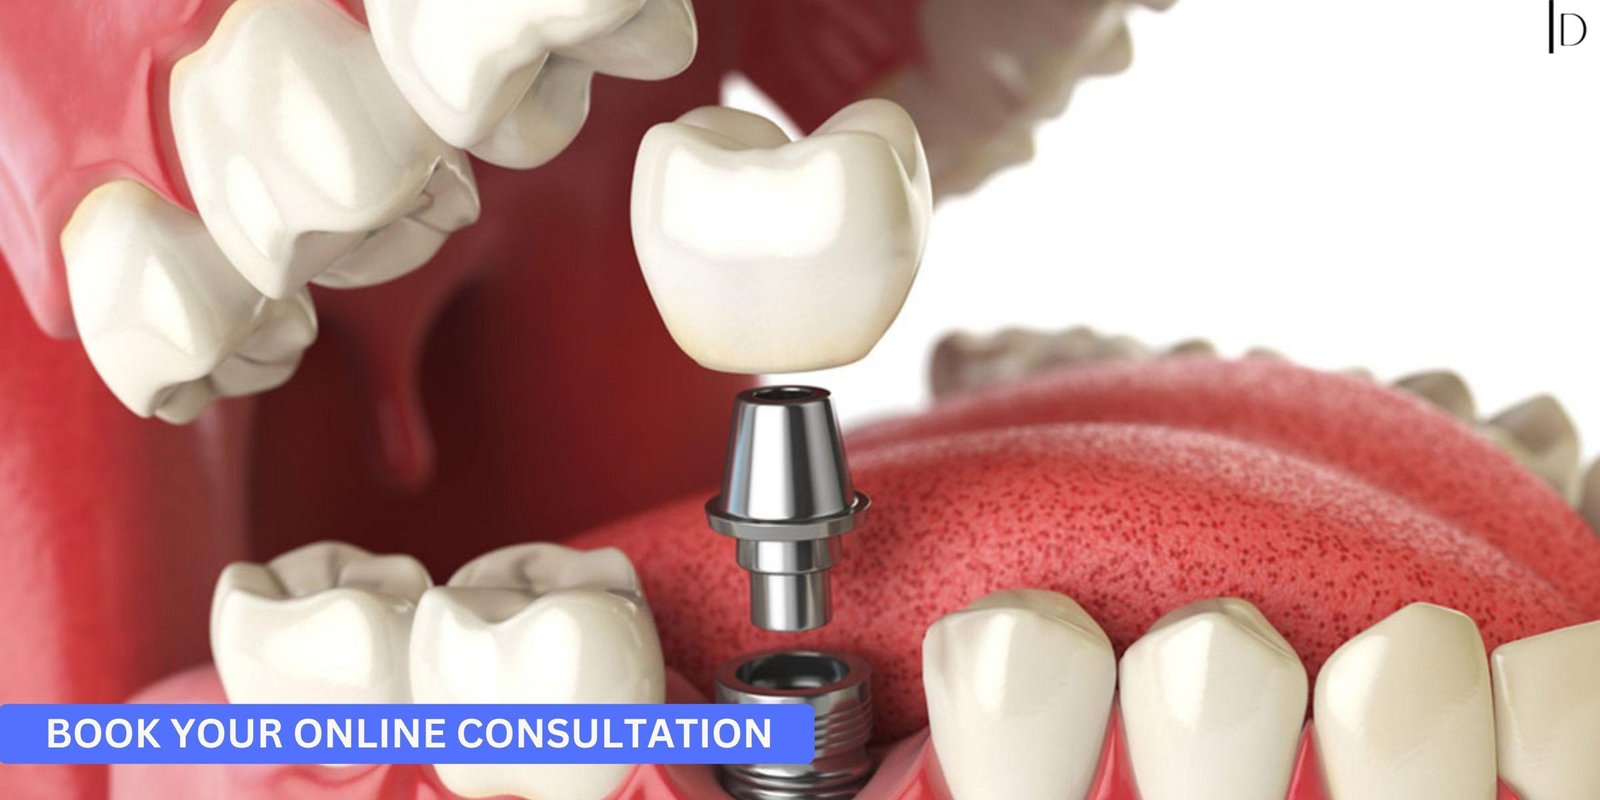 The Implant Dentists: Your Premier Destination for Dental Implants